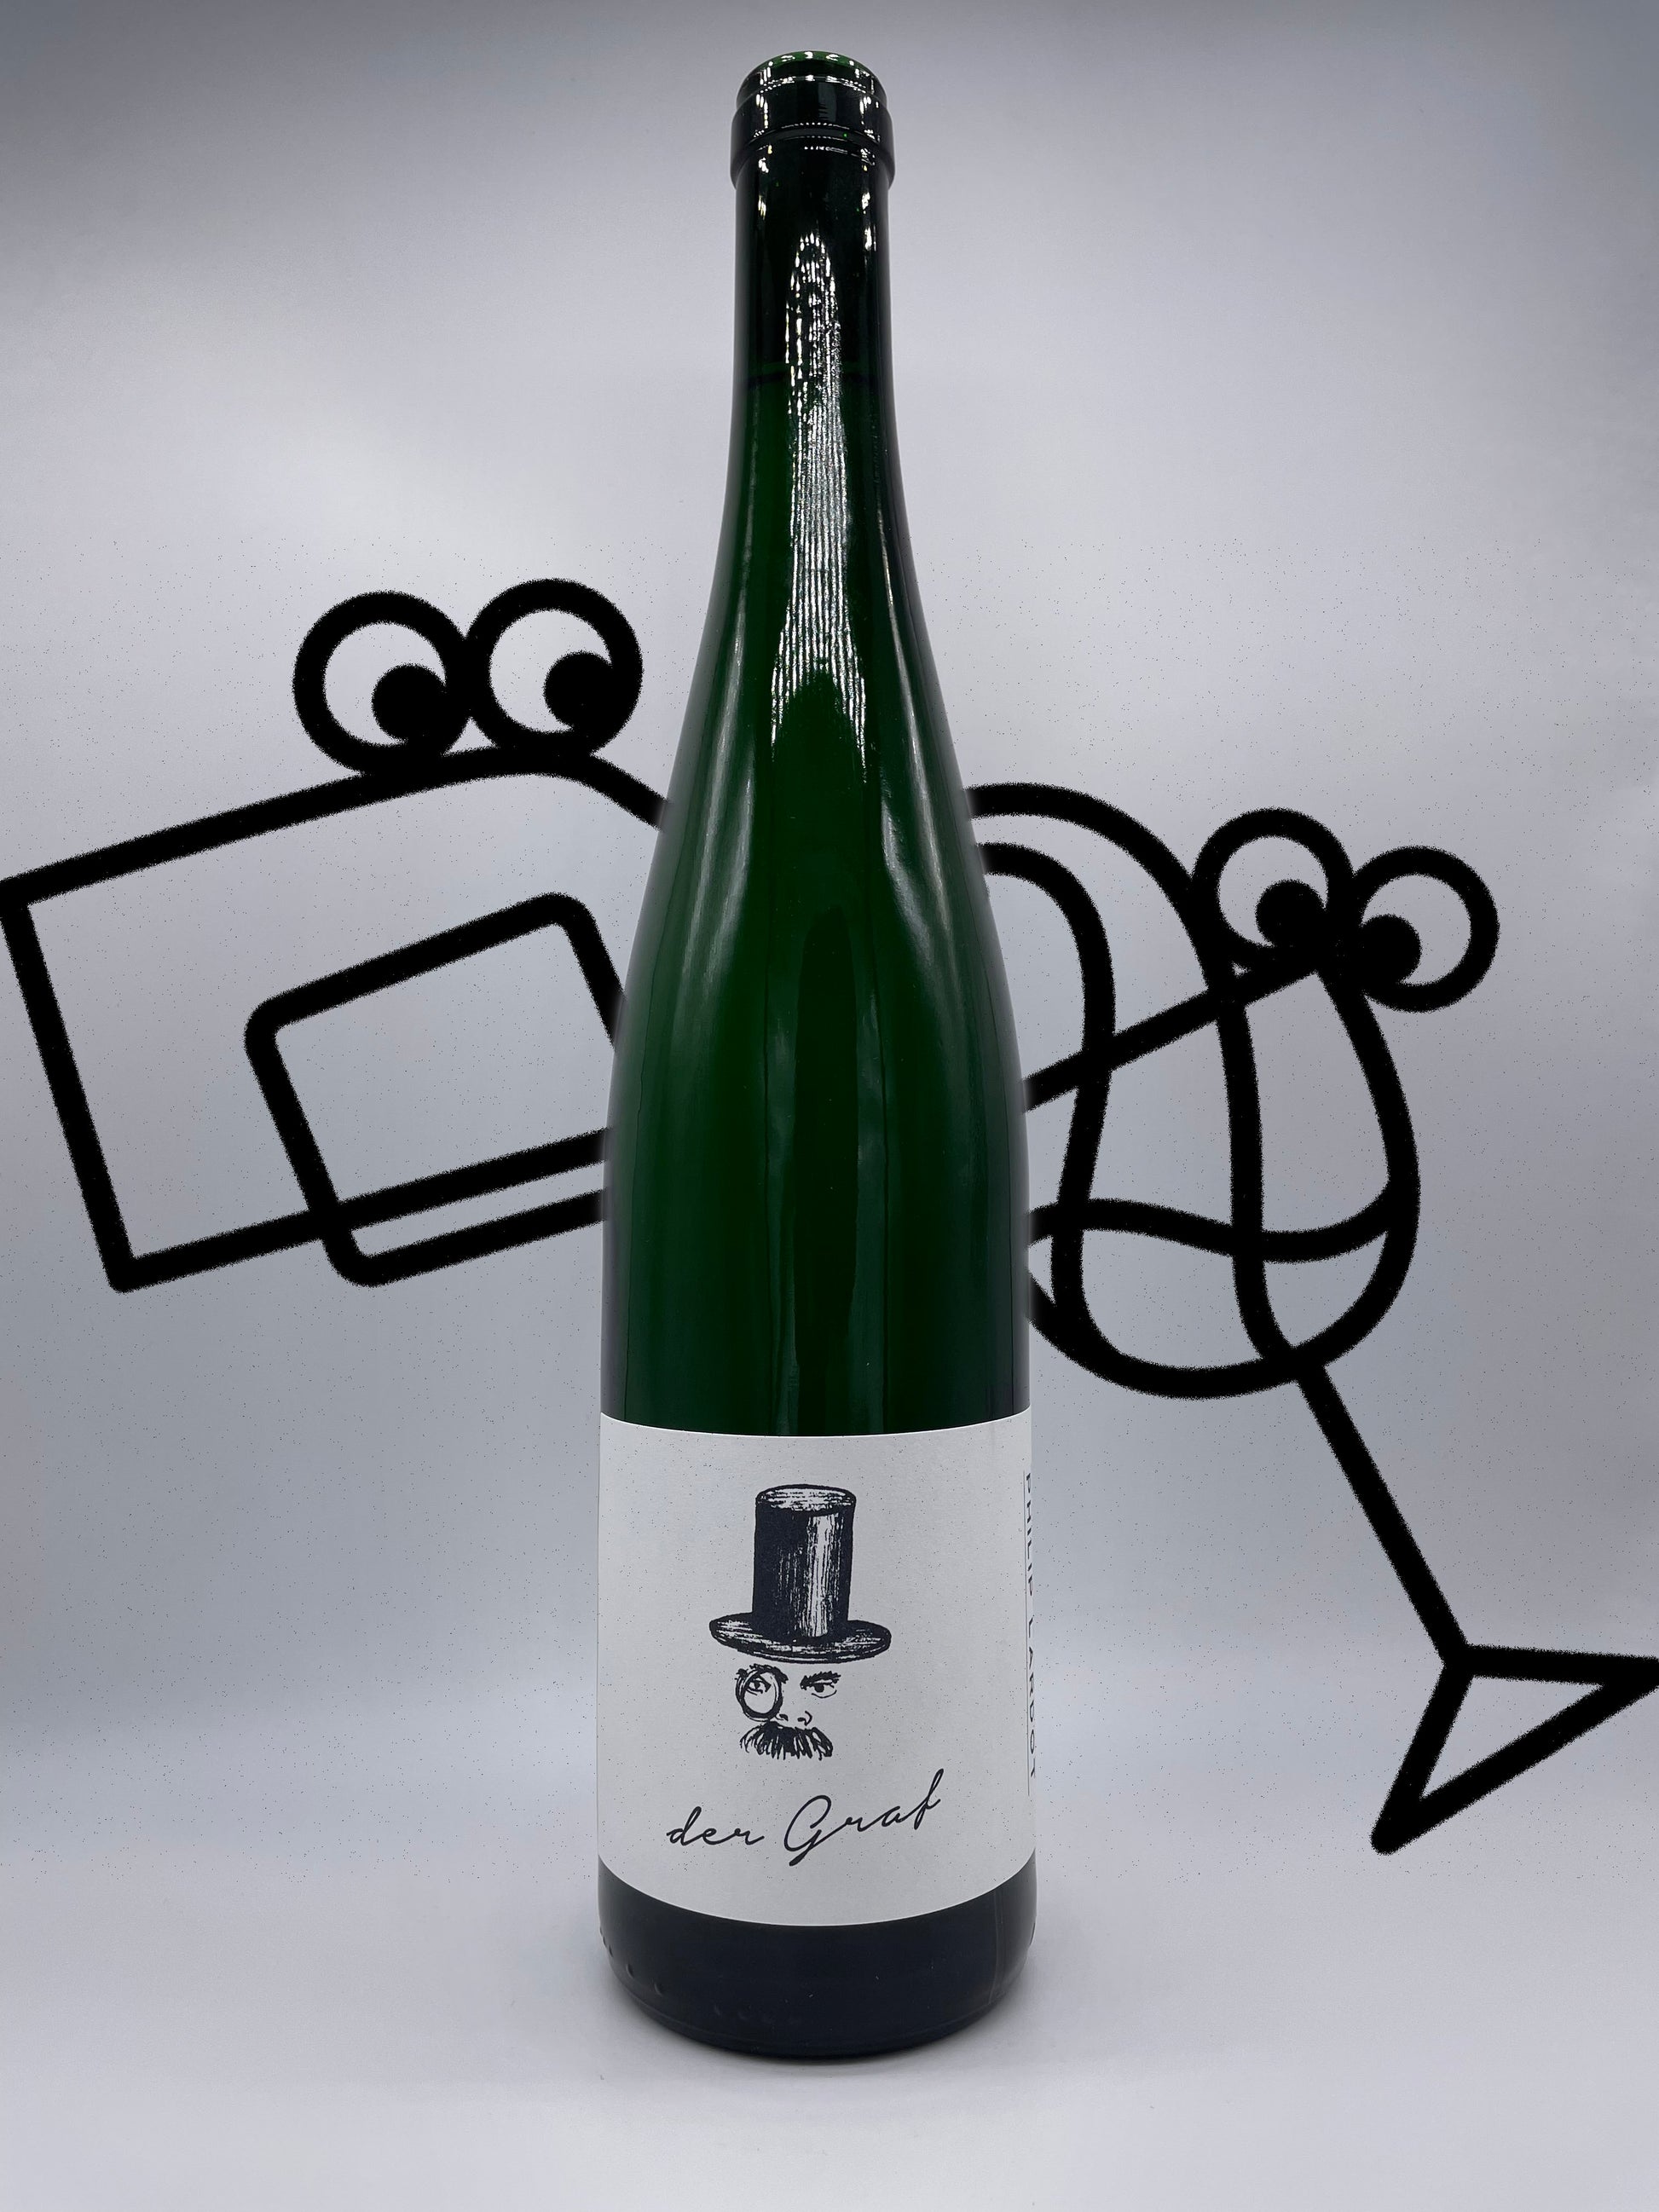 Lardot Riesling 'der Graf' Mosel, Germany Williston Park Wines 